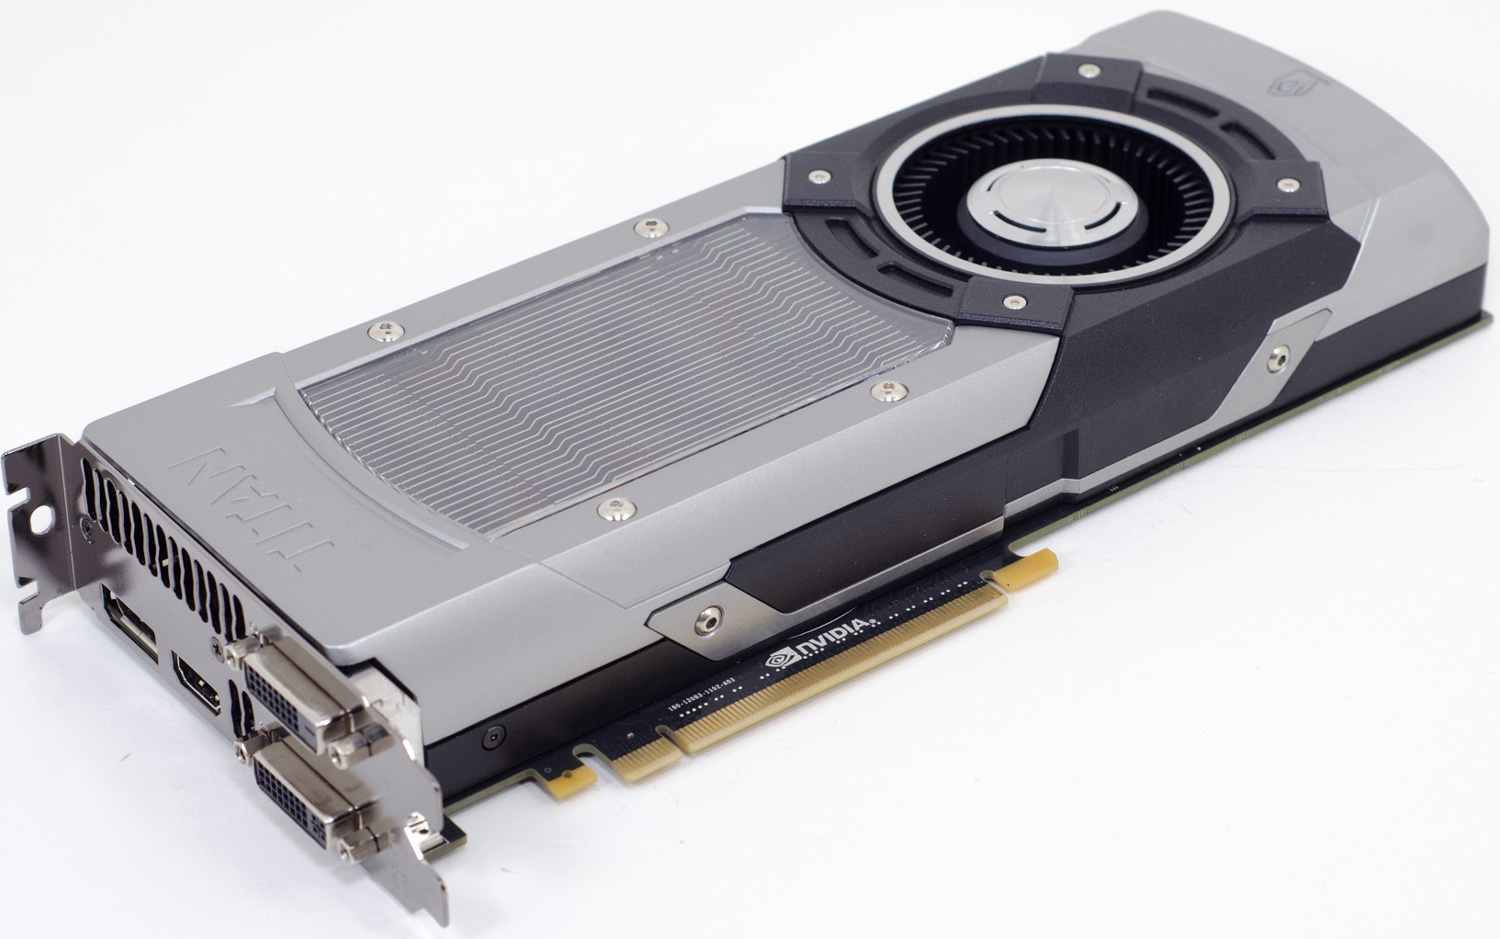 NVIDIA's GeForce GTX Titan Part 2: Unveiled